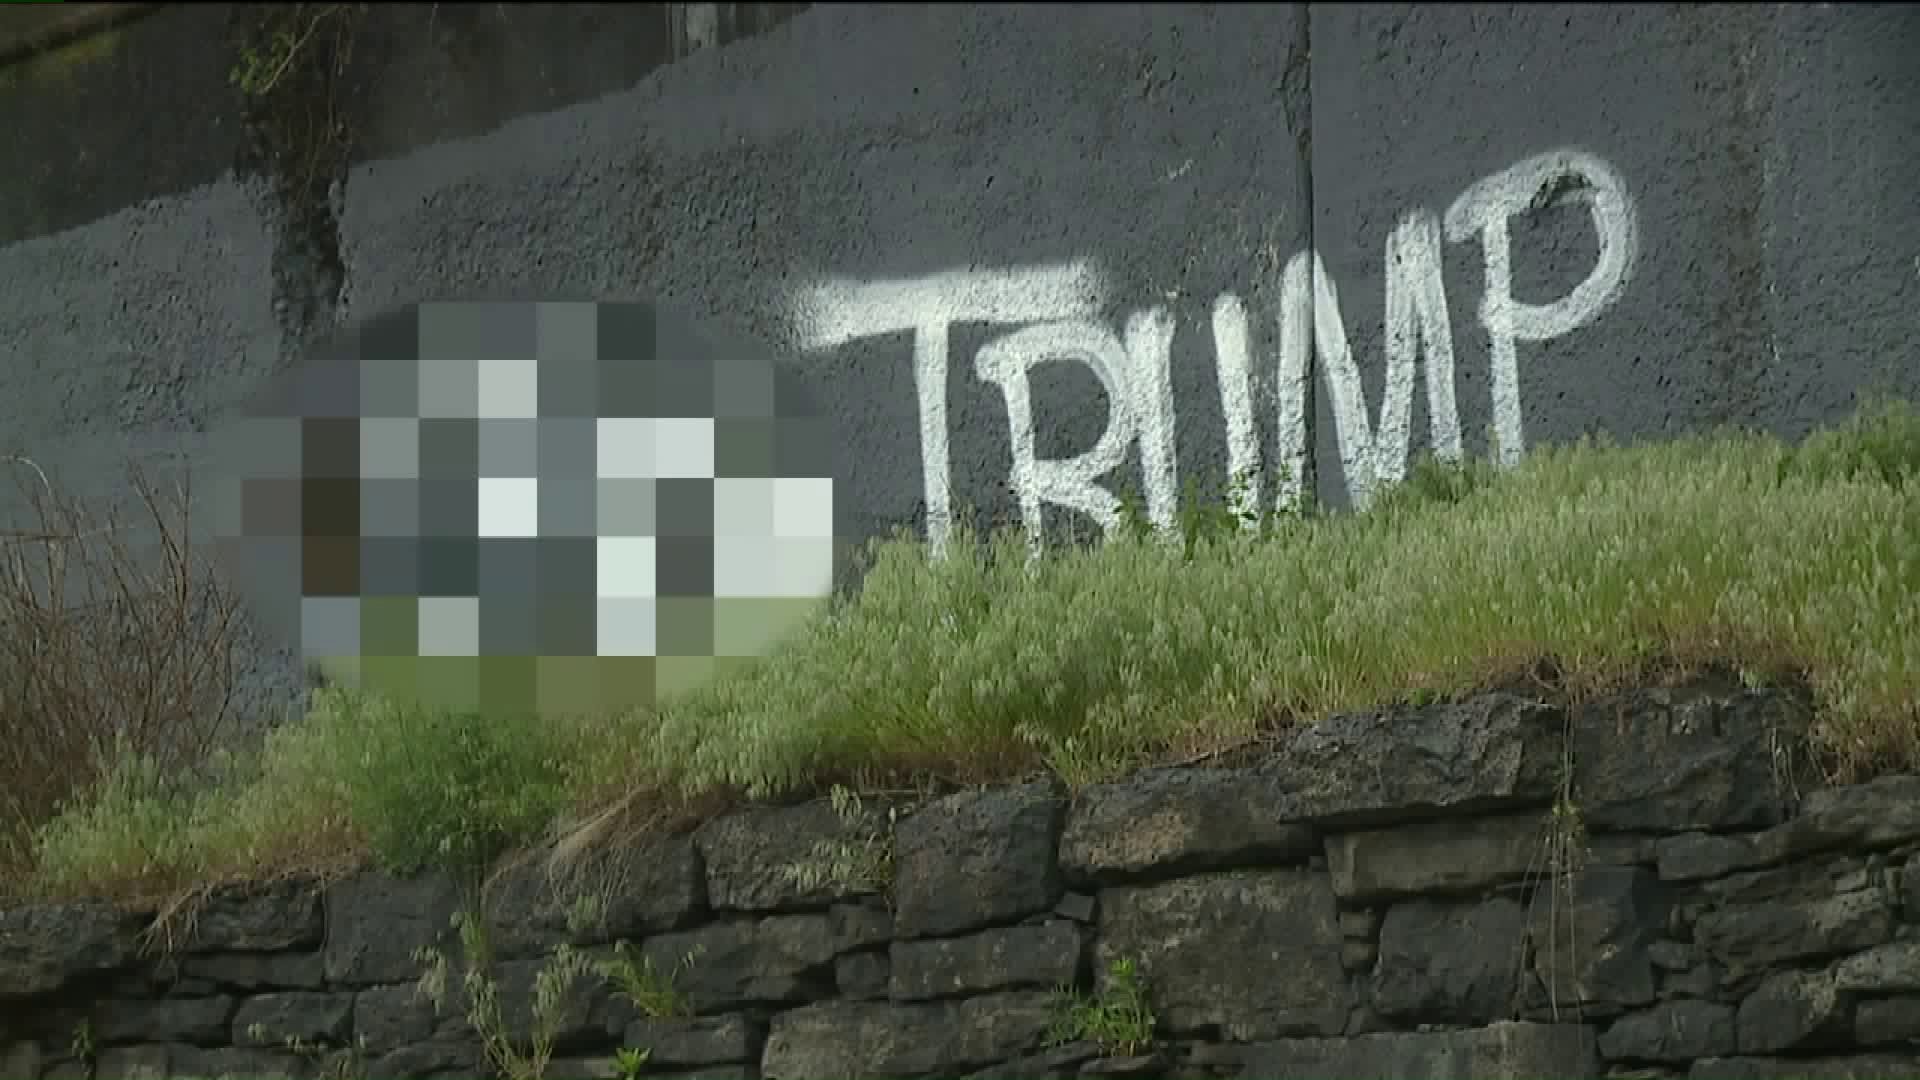 Graffiti in Scranton Includes Vulgar Message to President